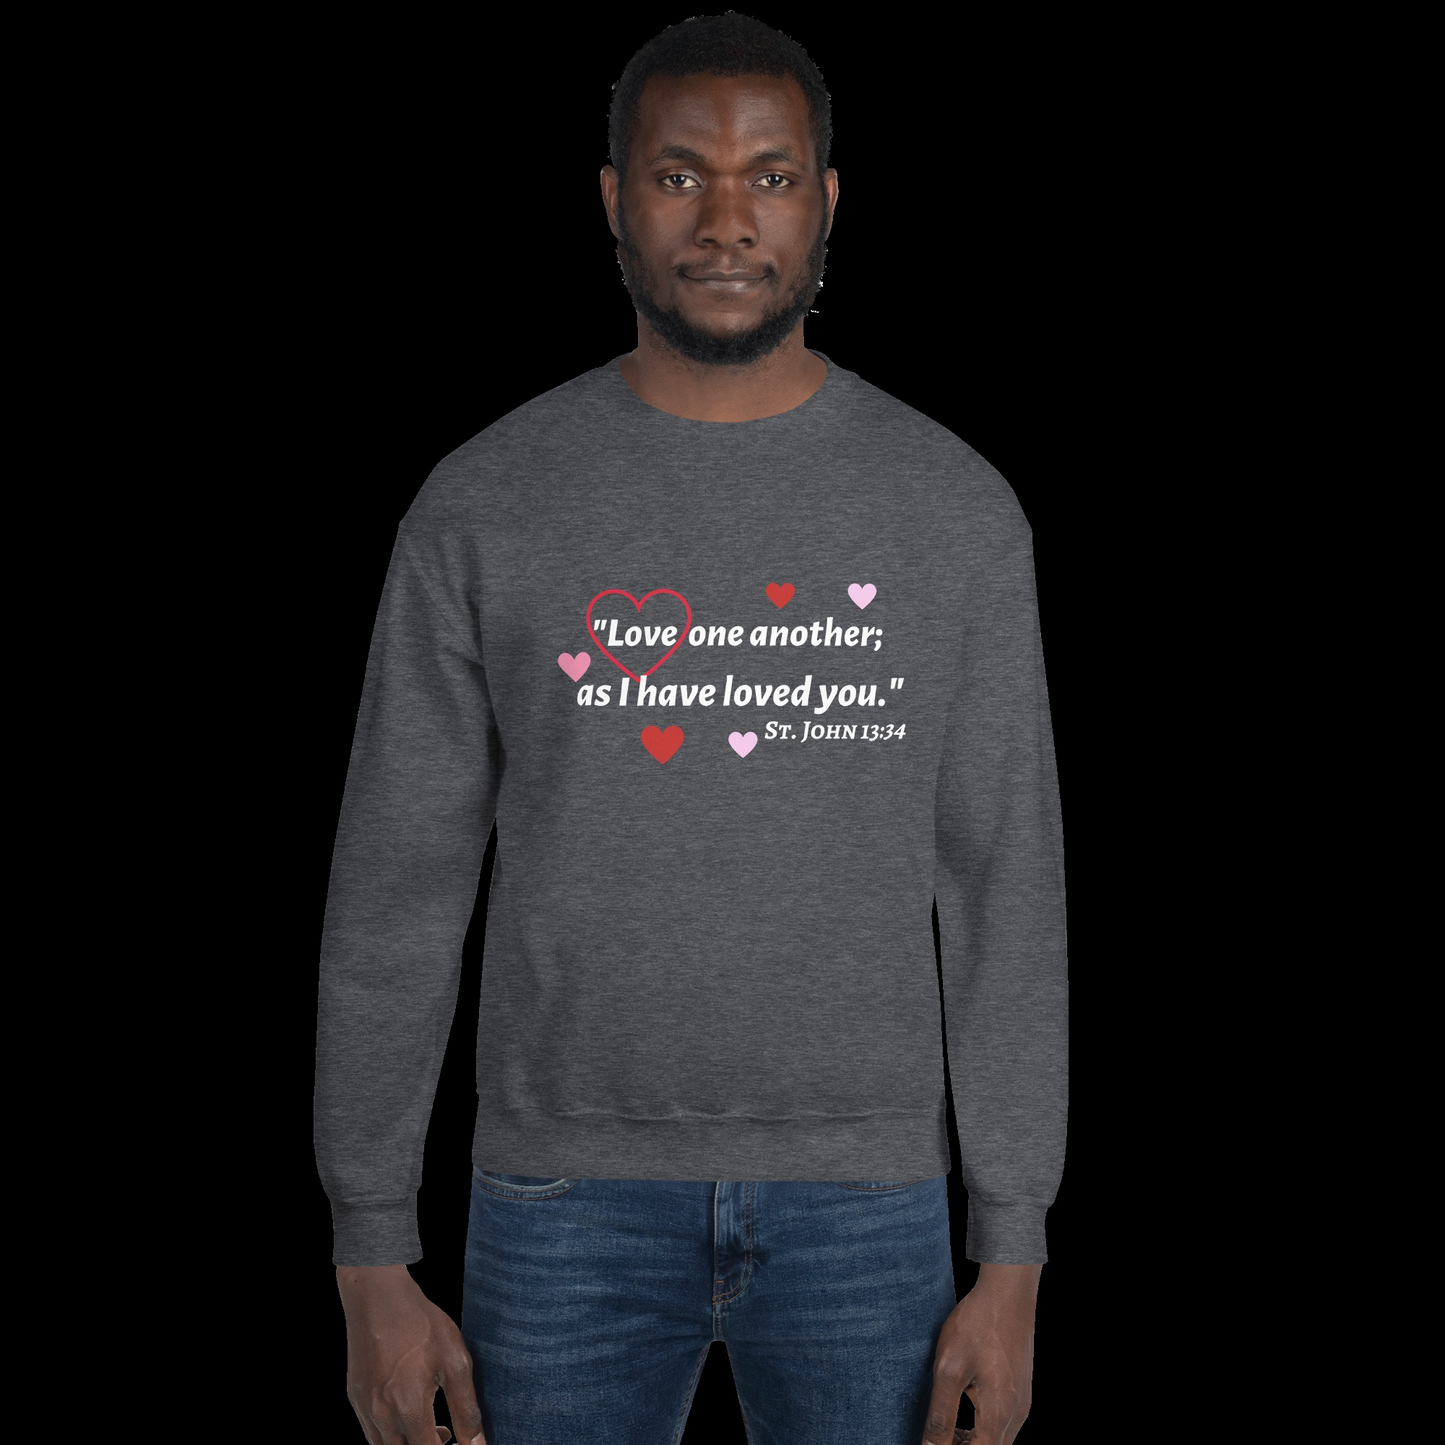 Love One Another Unisex Sweatshirt